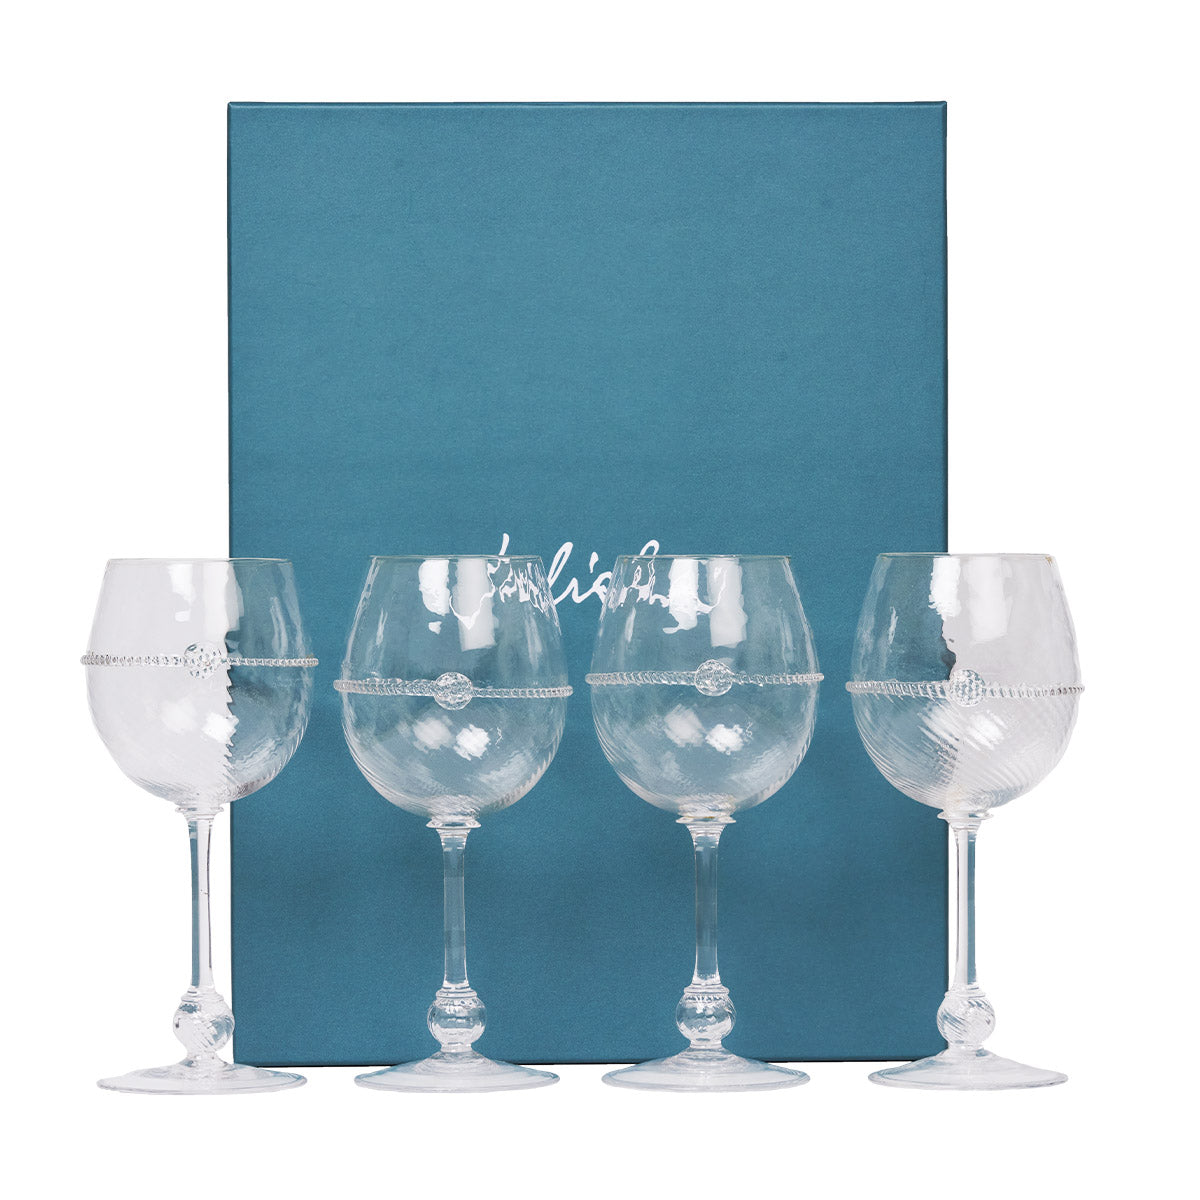 Graham White Wine Glass - Set of 4